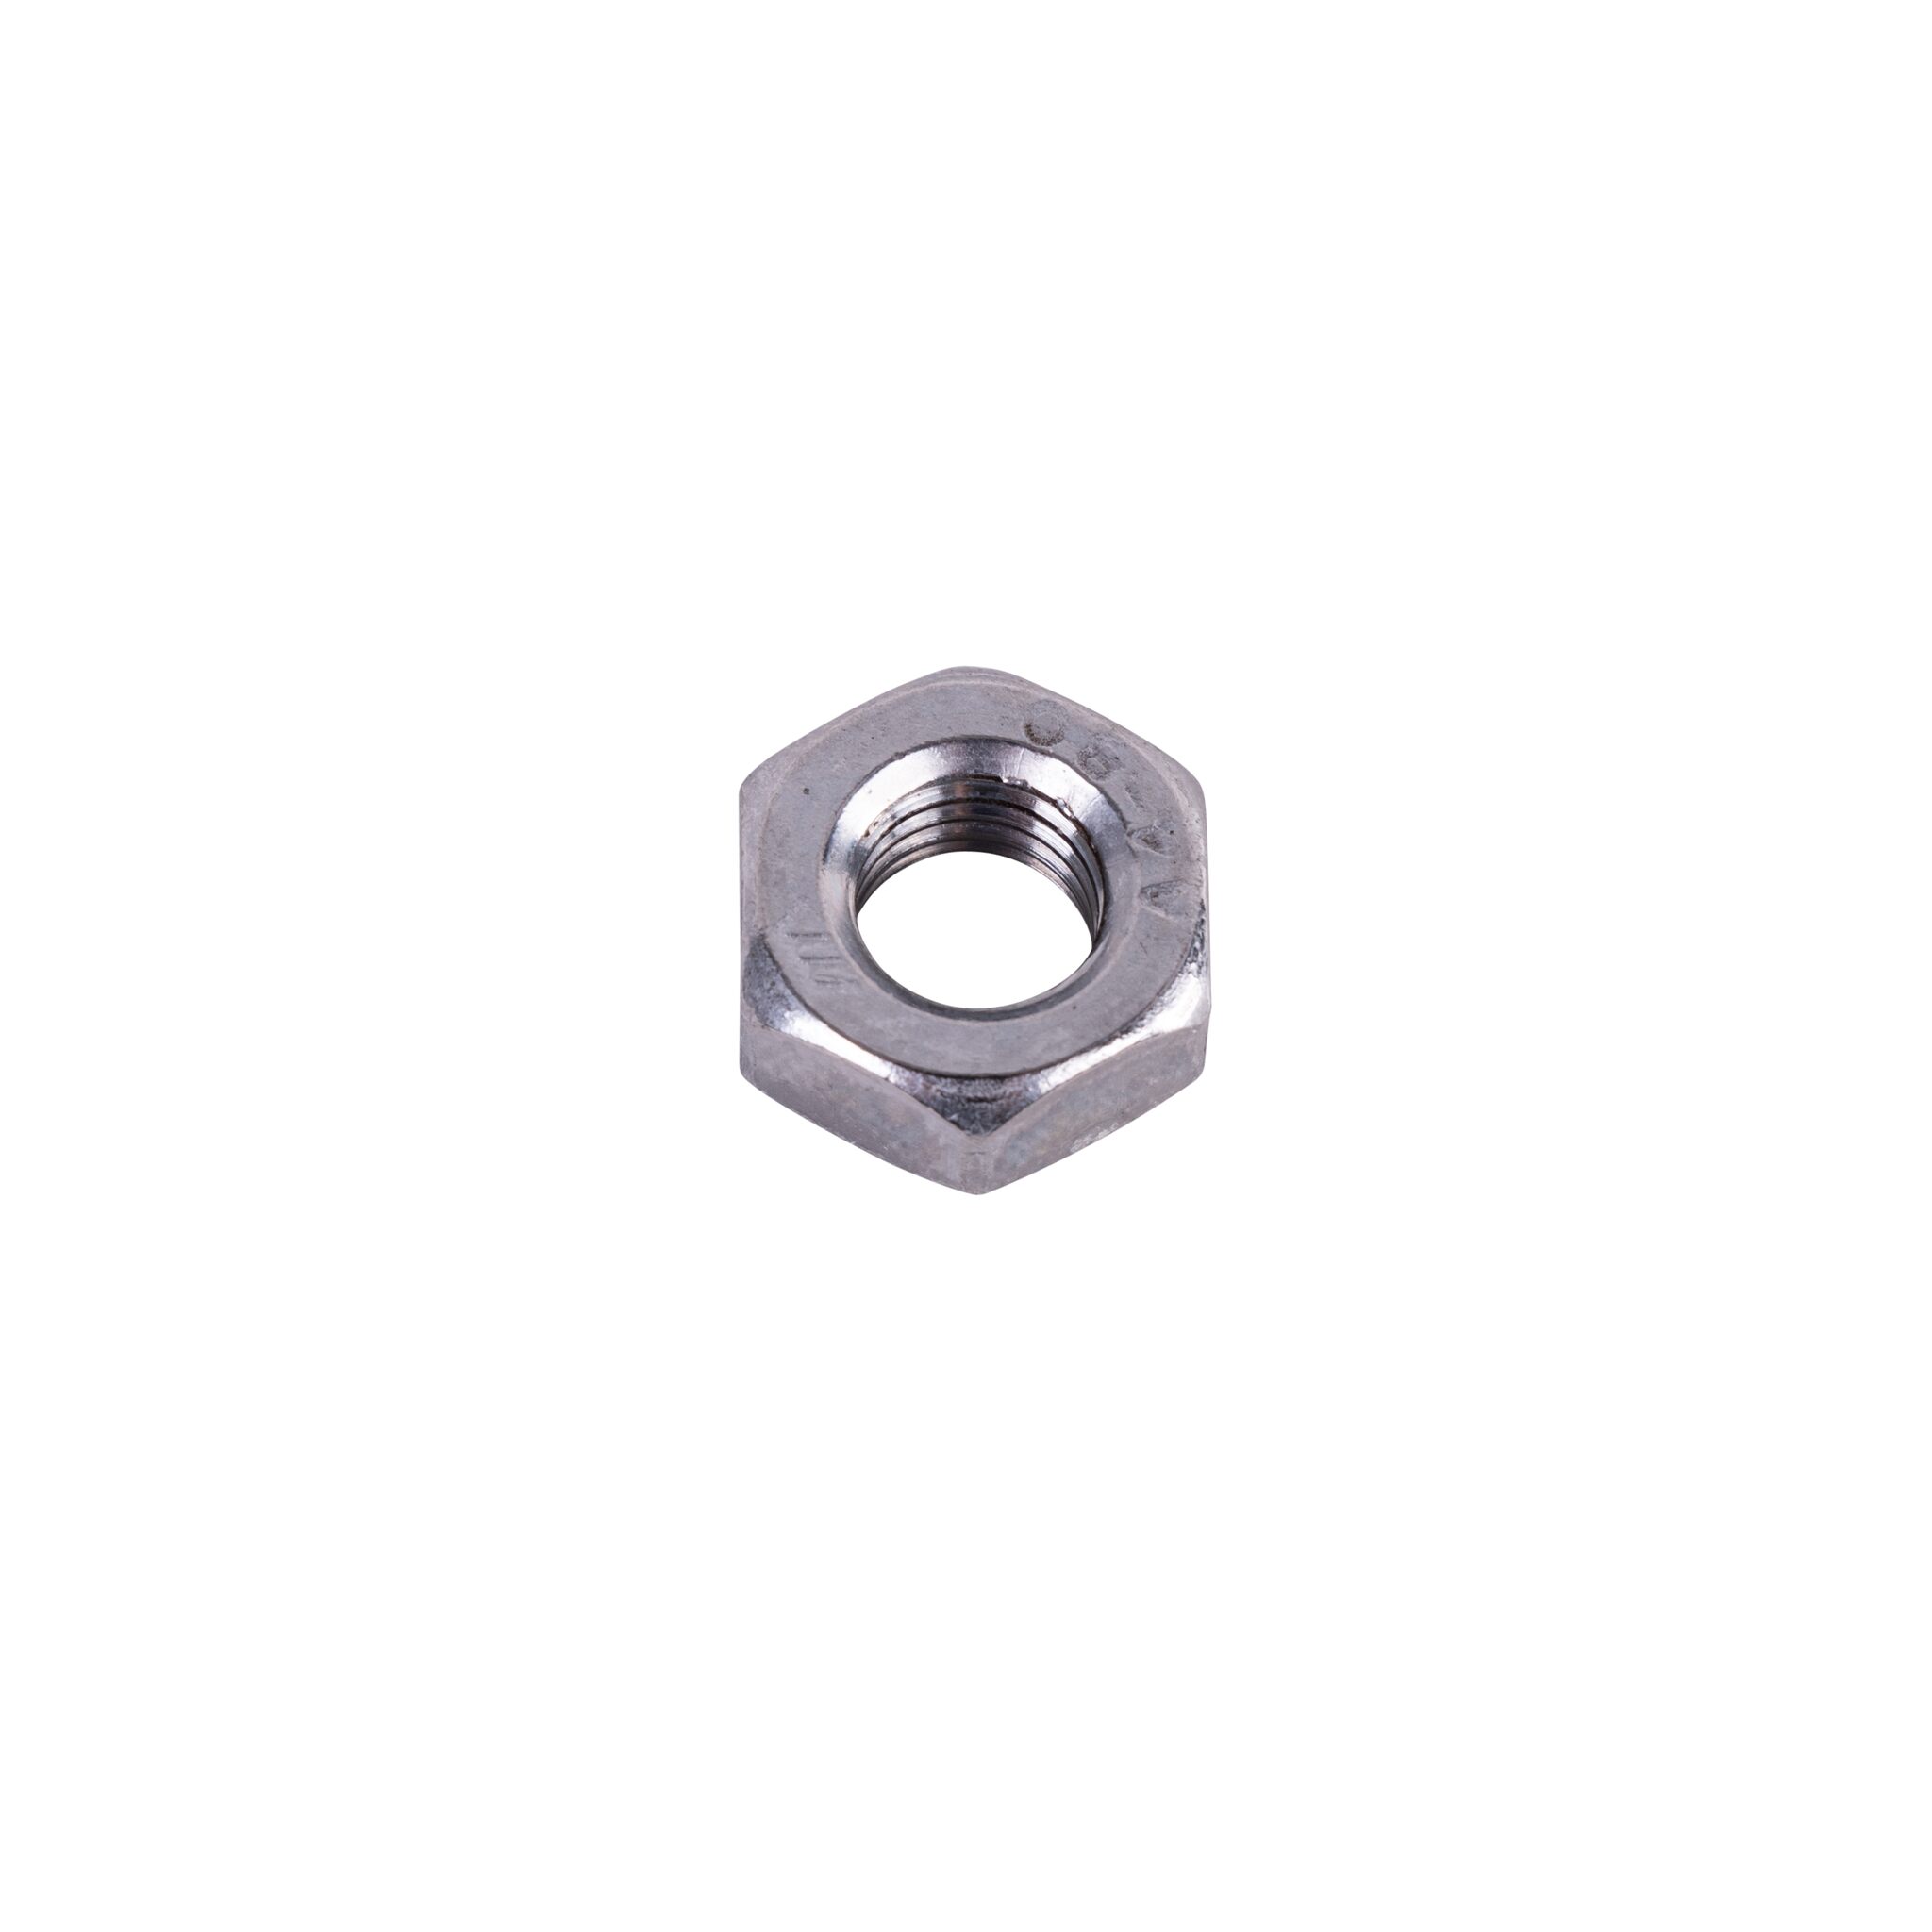 Hexagon nut (DIN 934-A4)